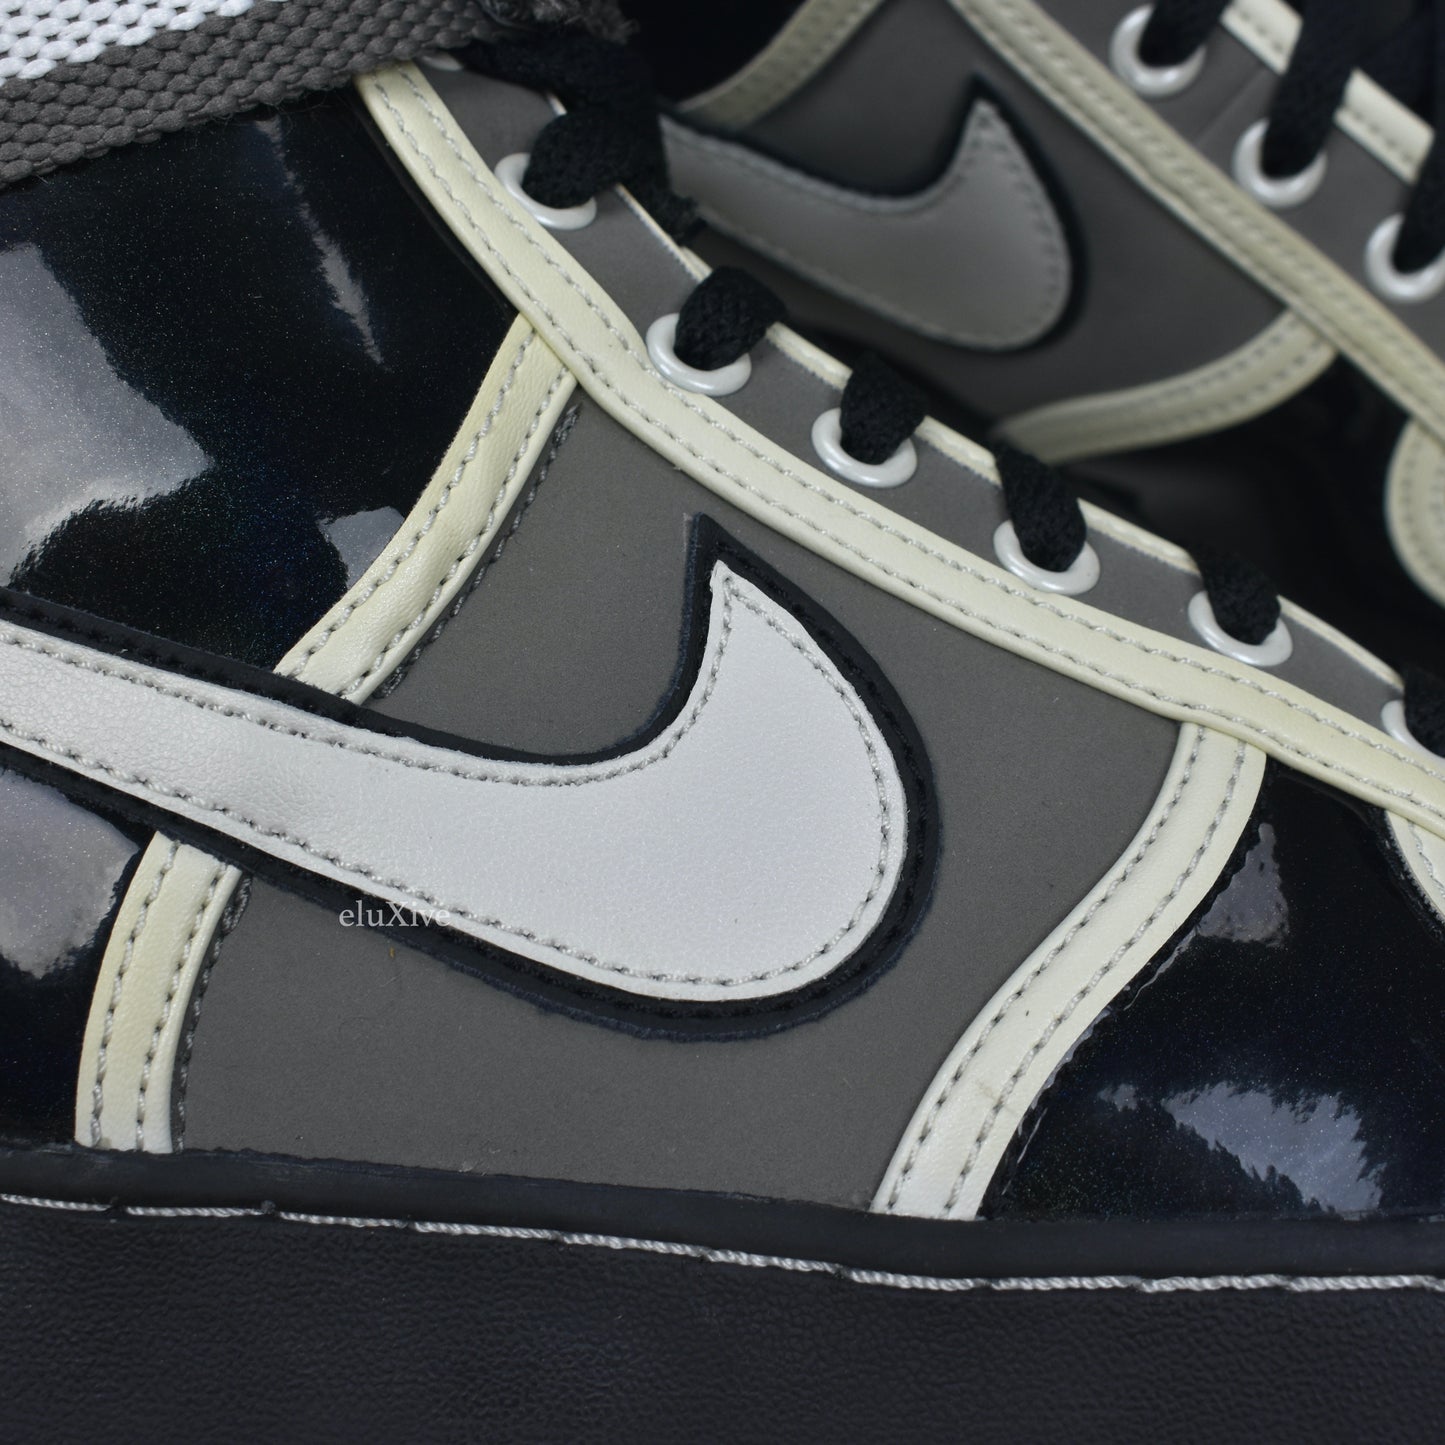 Nike - Vandal High Leather 'Zero Gravity' (Glitter Patent)